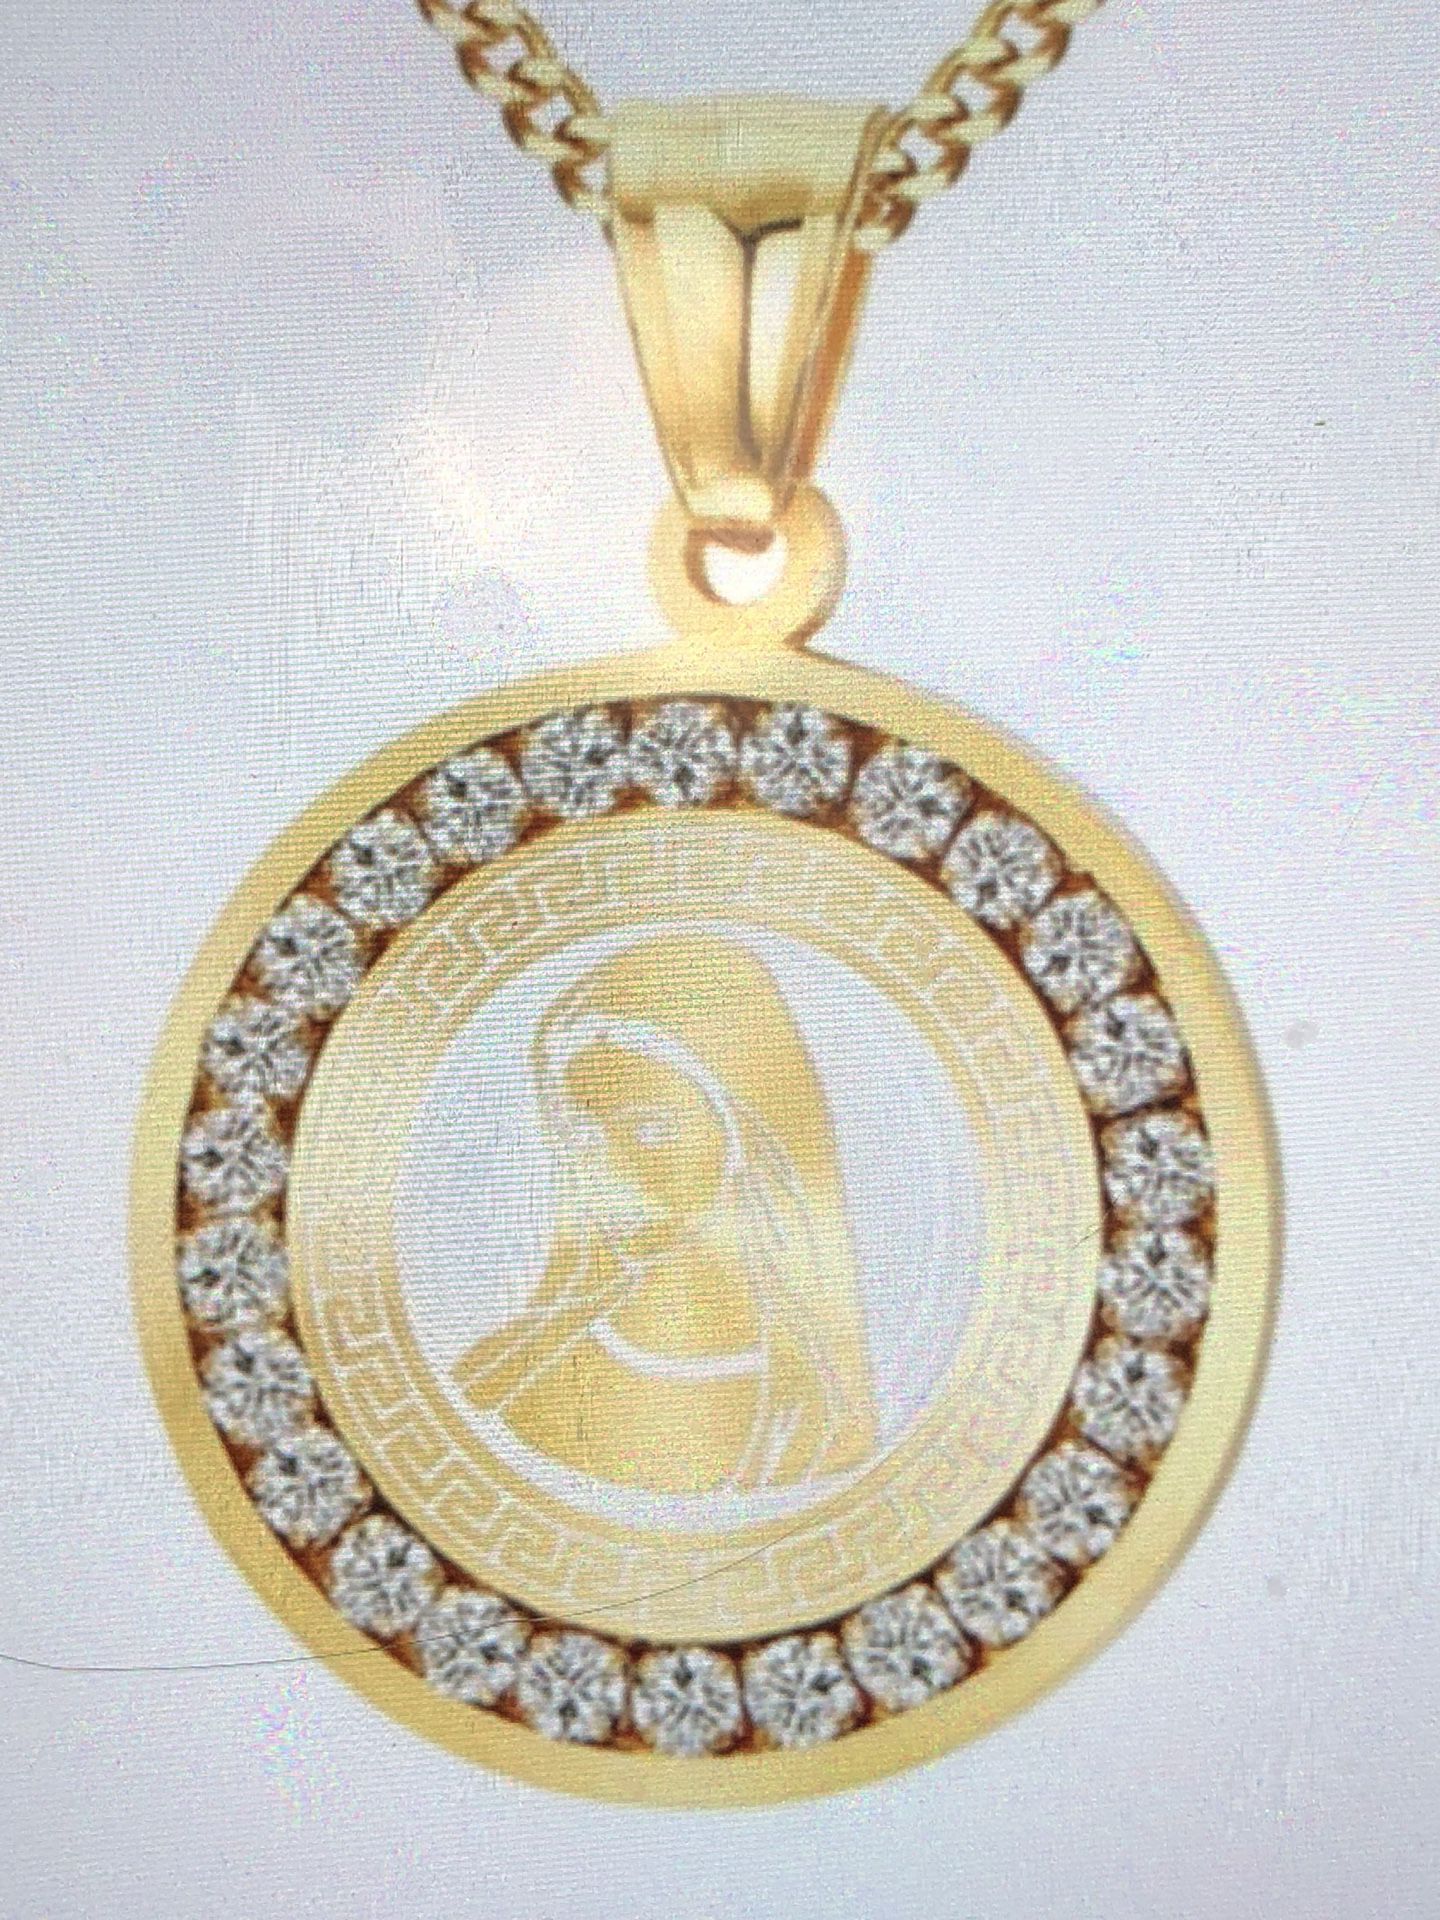 Virgin Mary Pendant Charm Necklace & Chain(Please Read Description Completely)